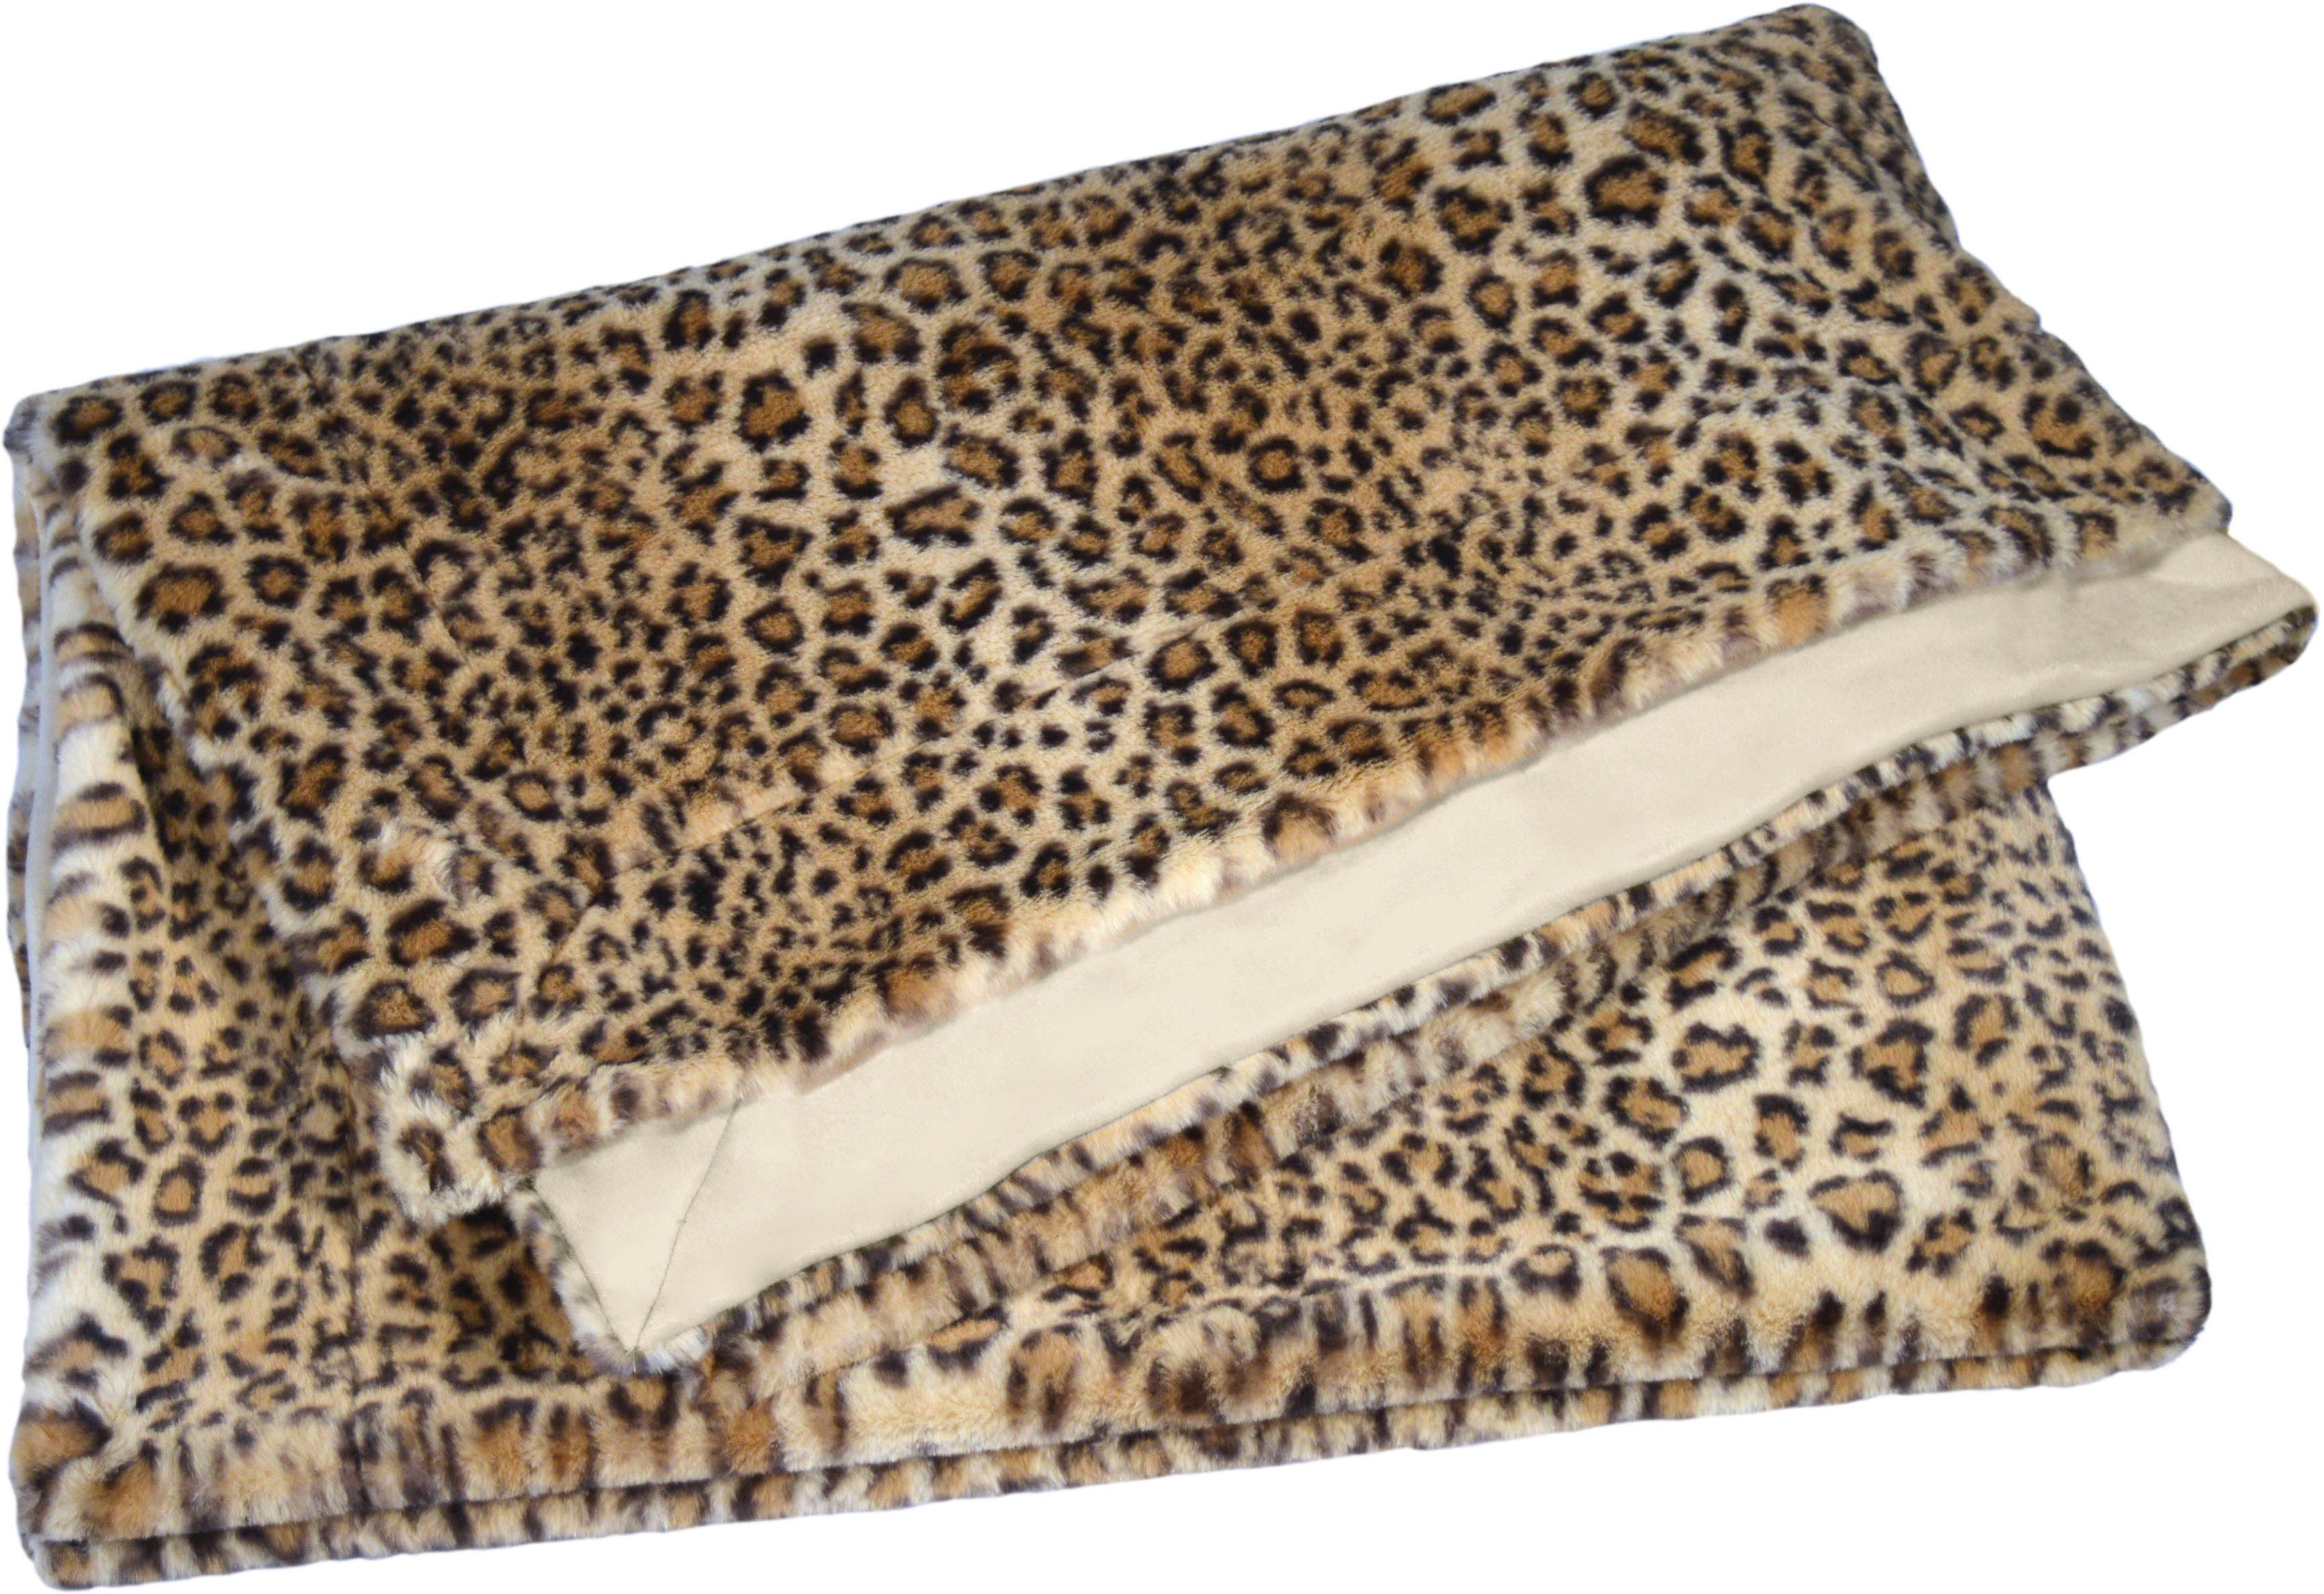 Wohndecke Leopard, MESANA, aus Fellimitat hochwertigem